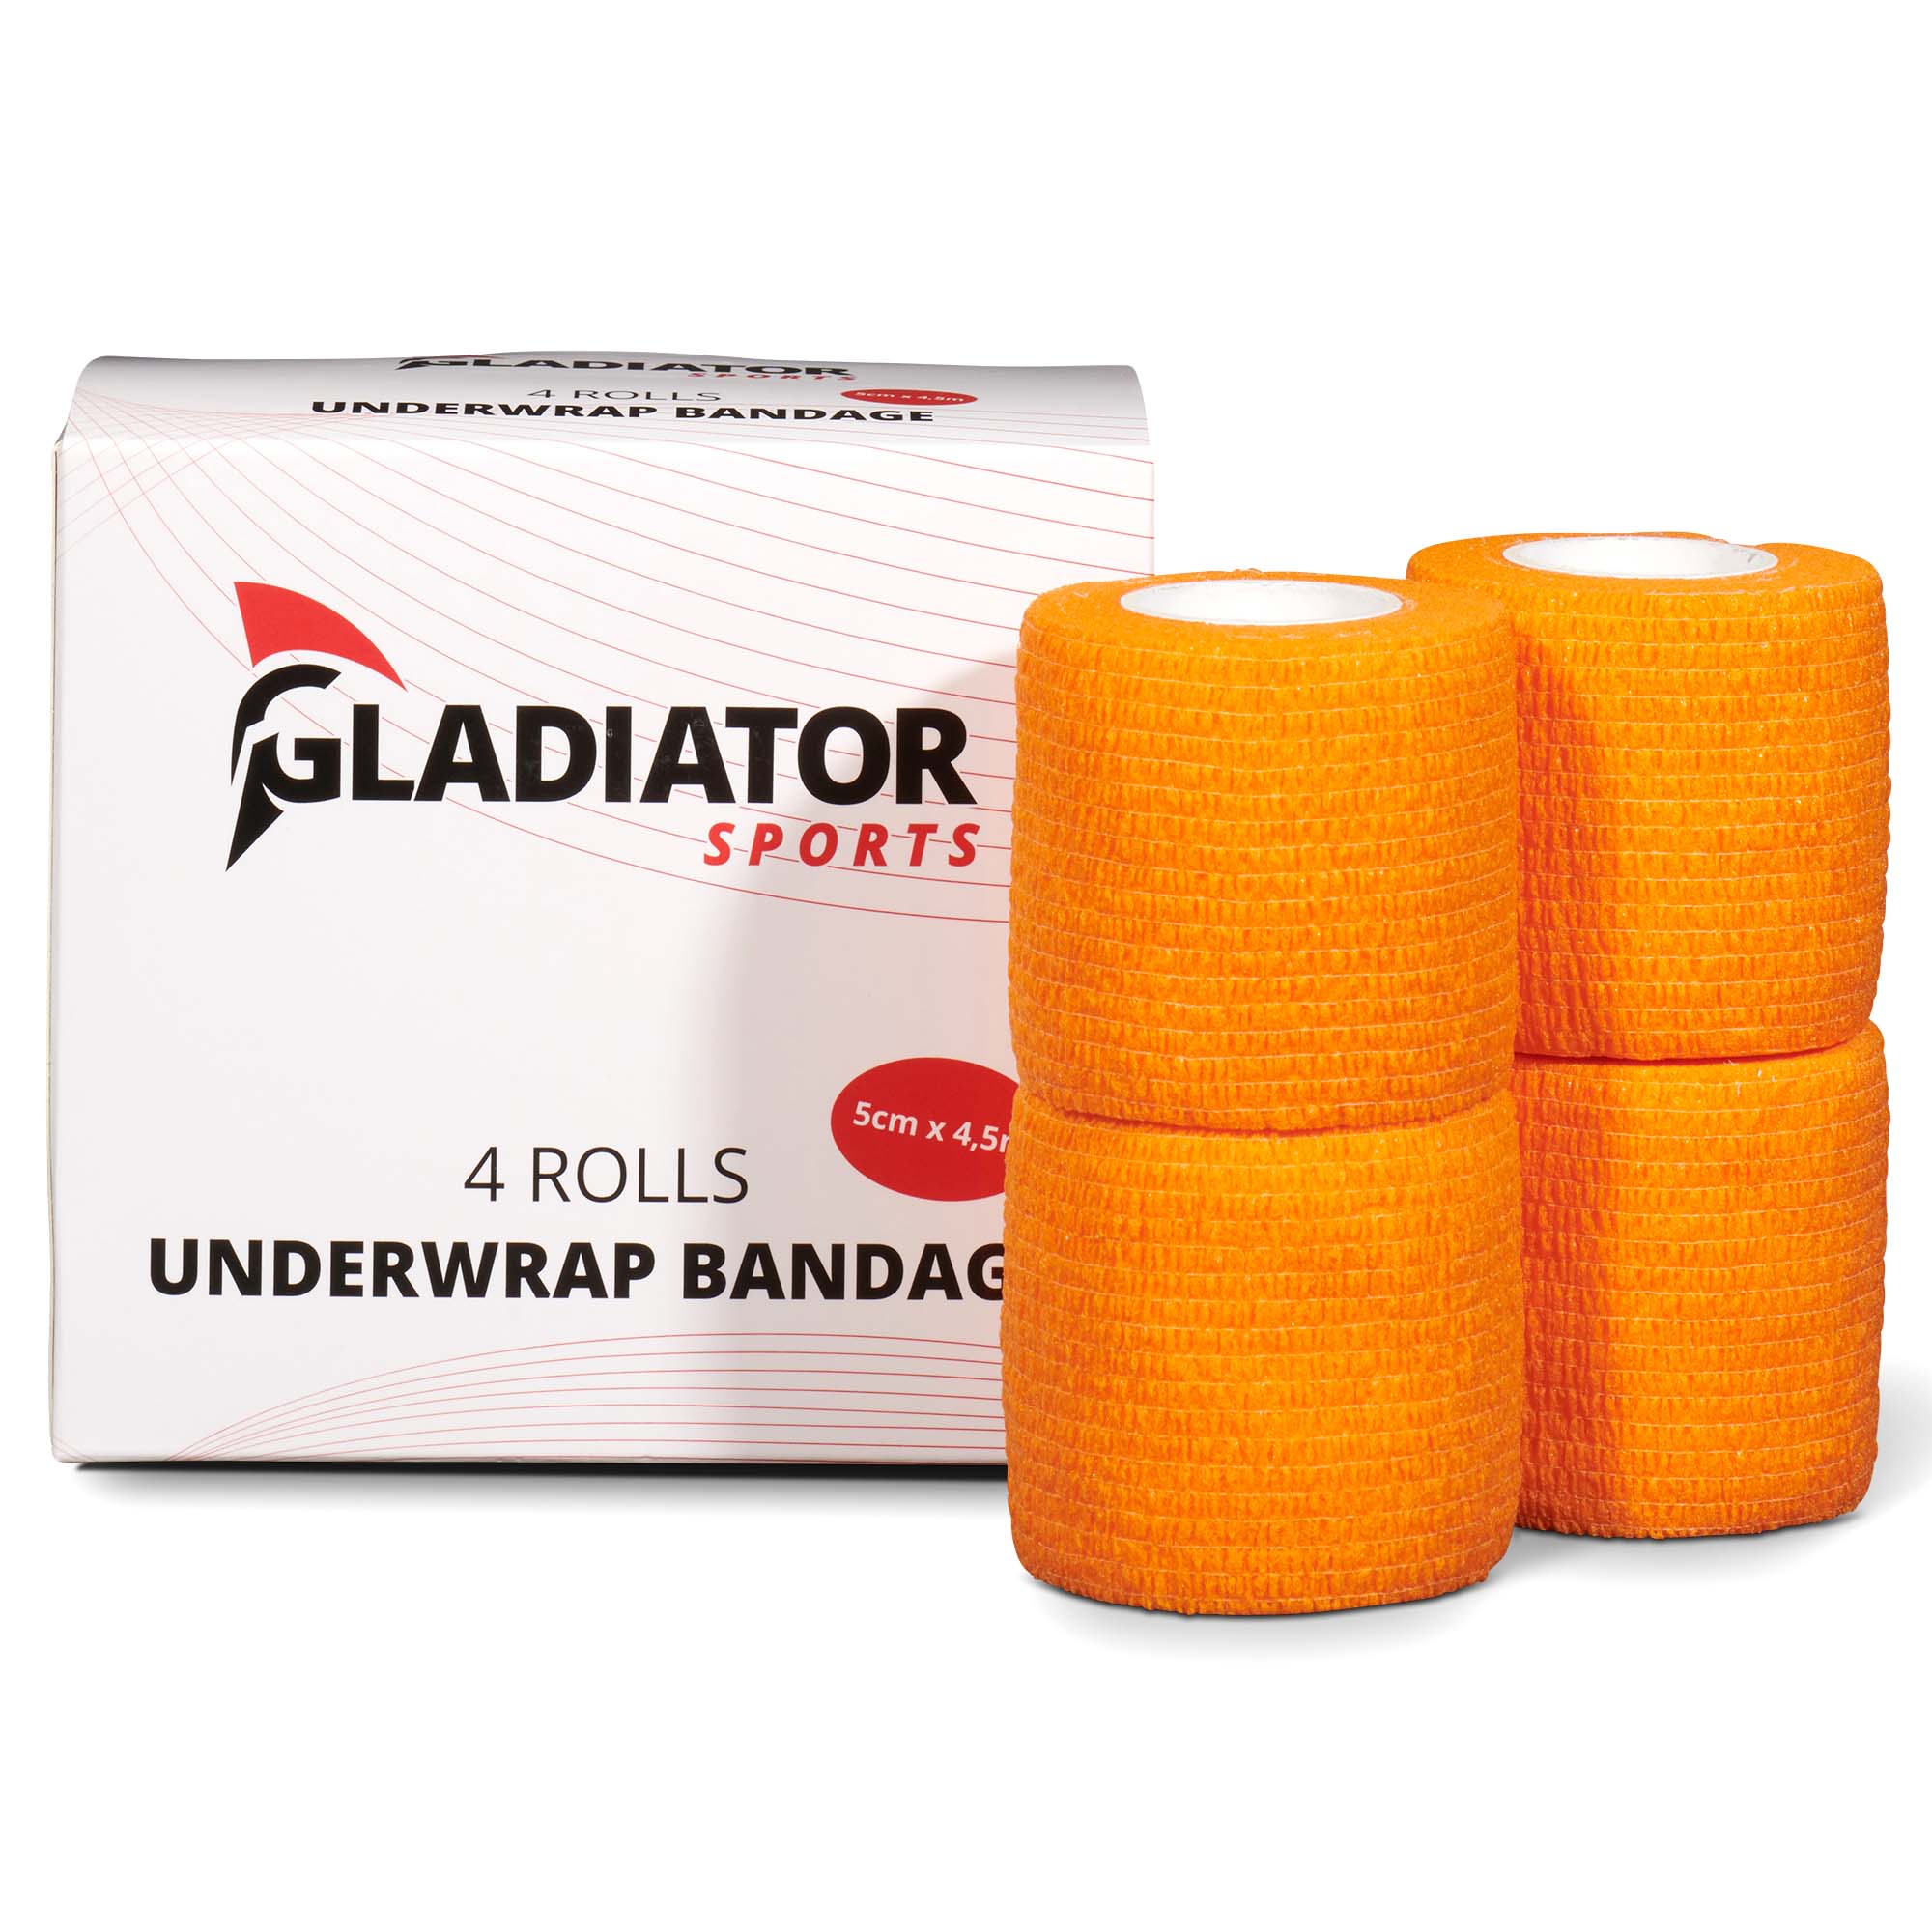 Gladiator Sports underwrap bandage per 4 rolls orange with box